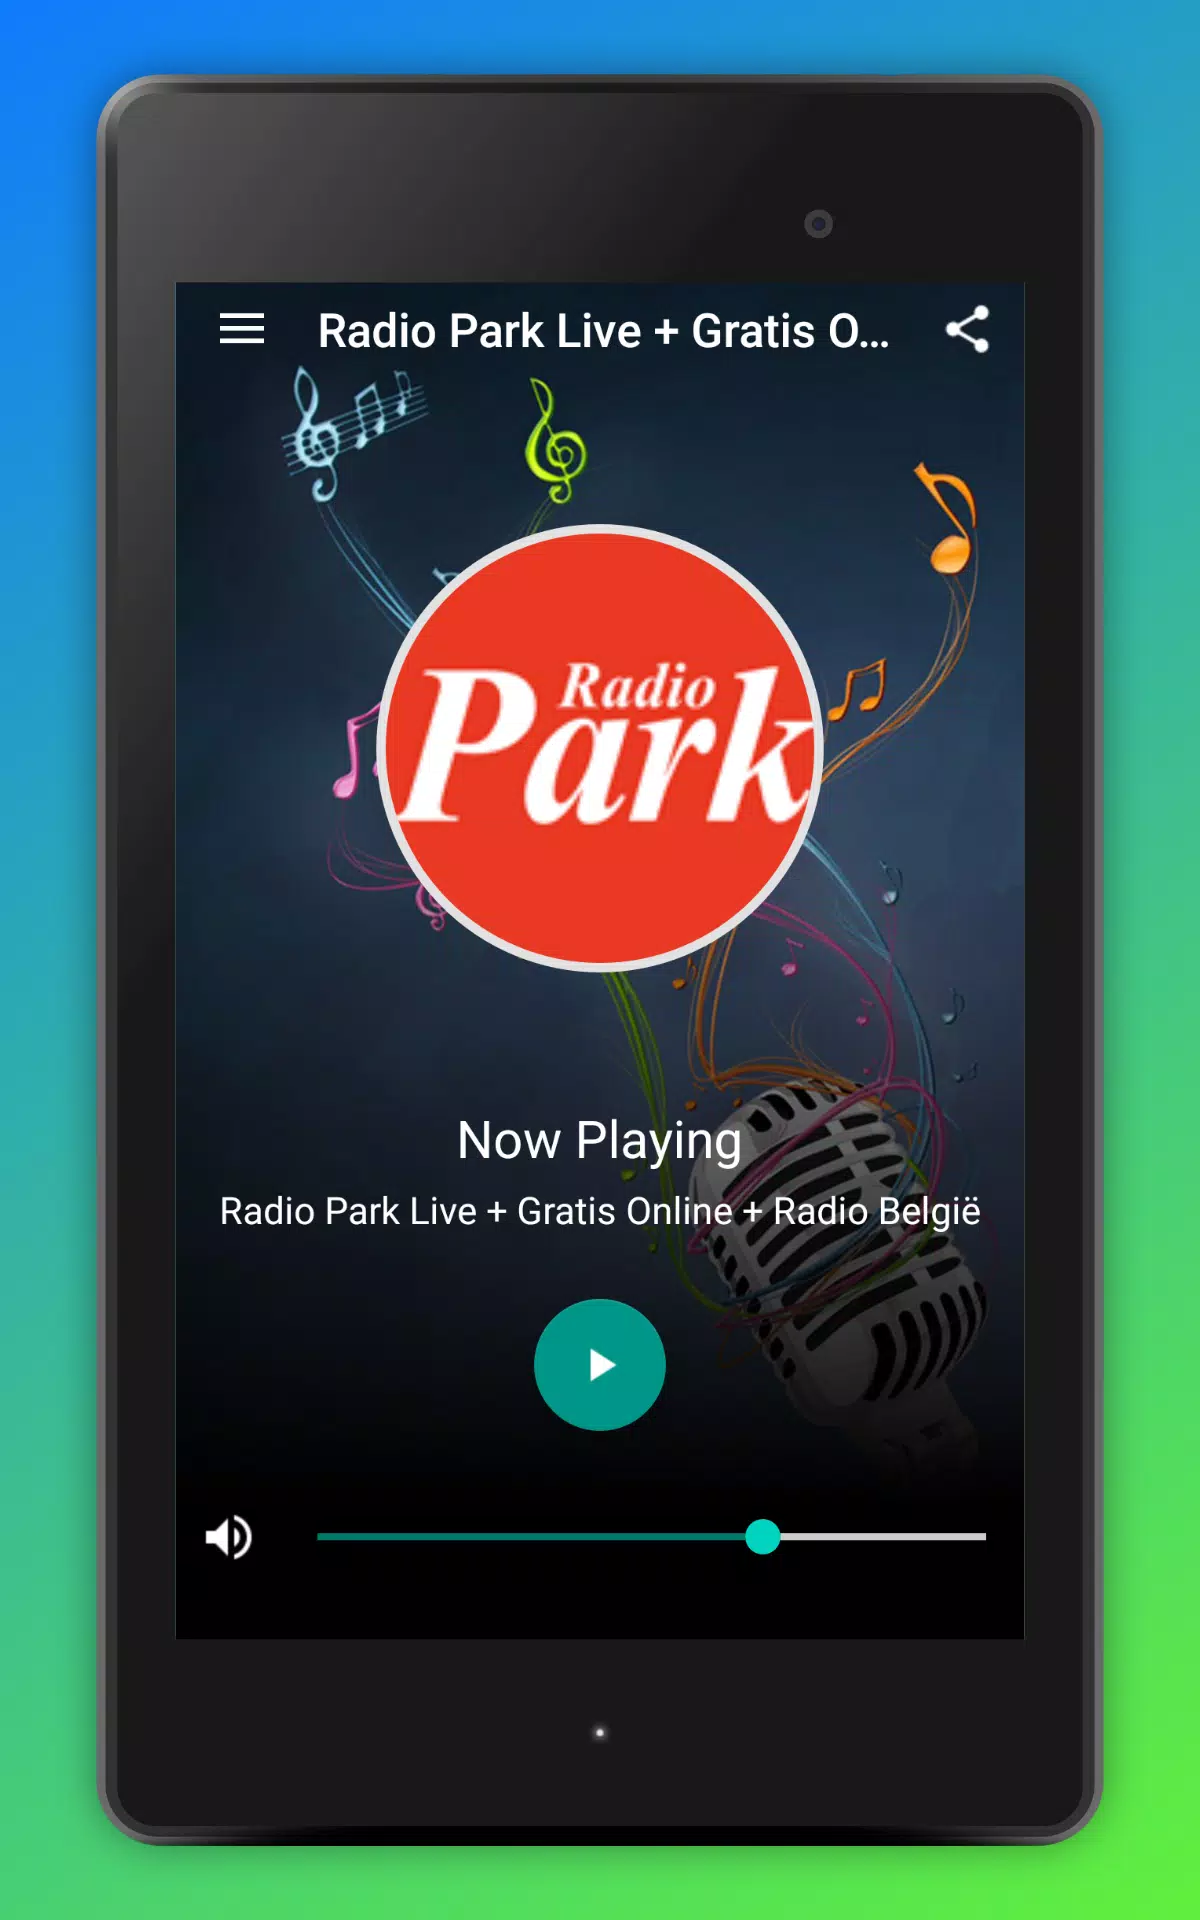 Radio Park Live + Gratis Online + Radio België para Android - APK Baixar